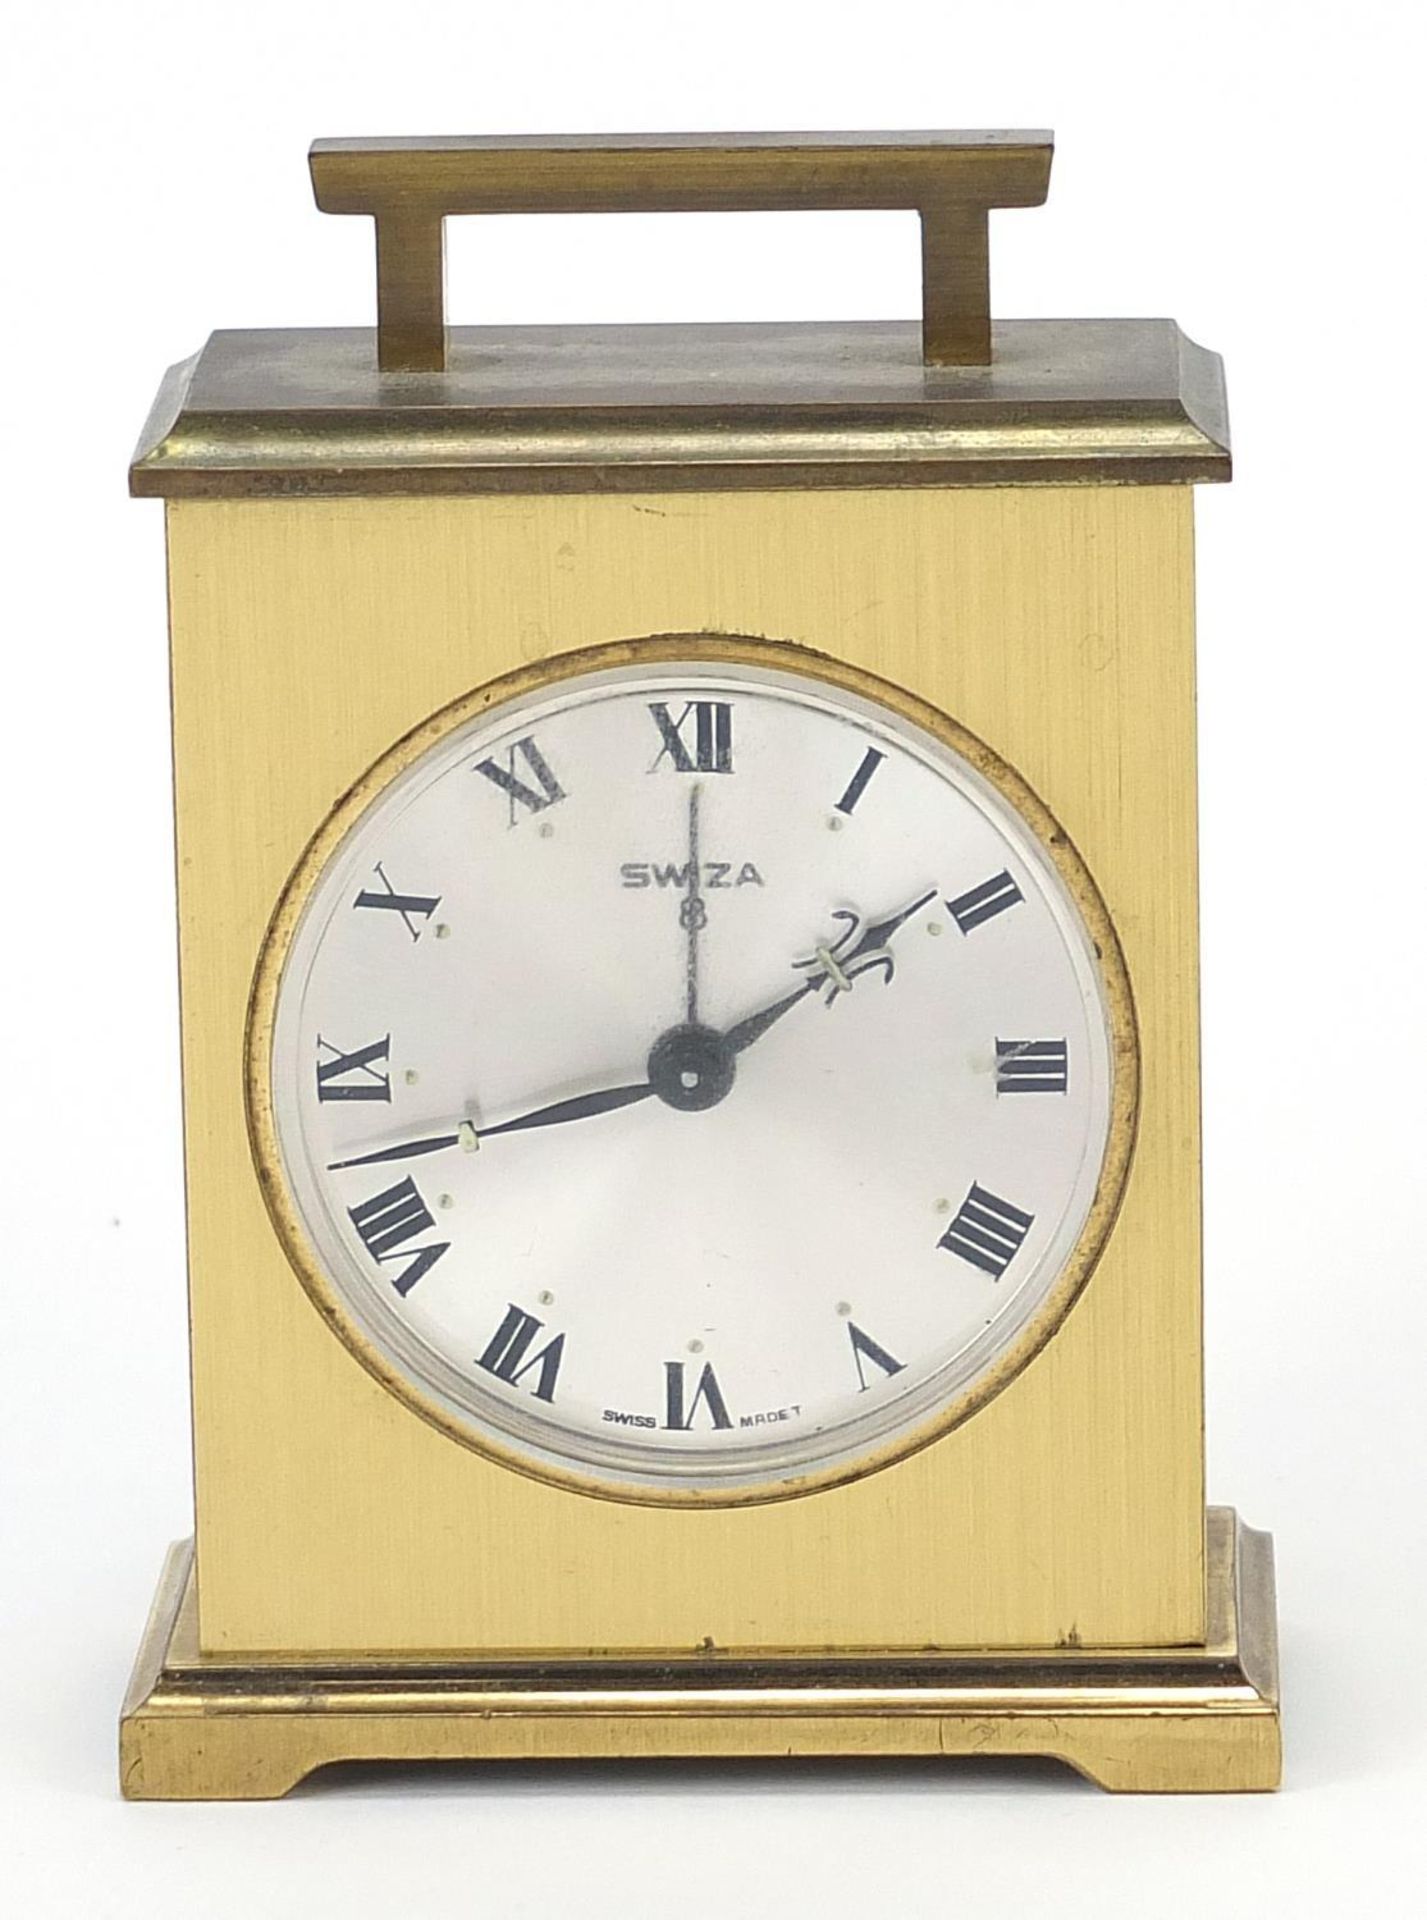 Swiza eight day alarm clock, 10cm high - Image 2 of 6